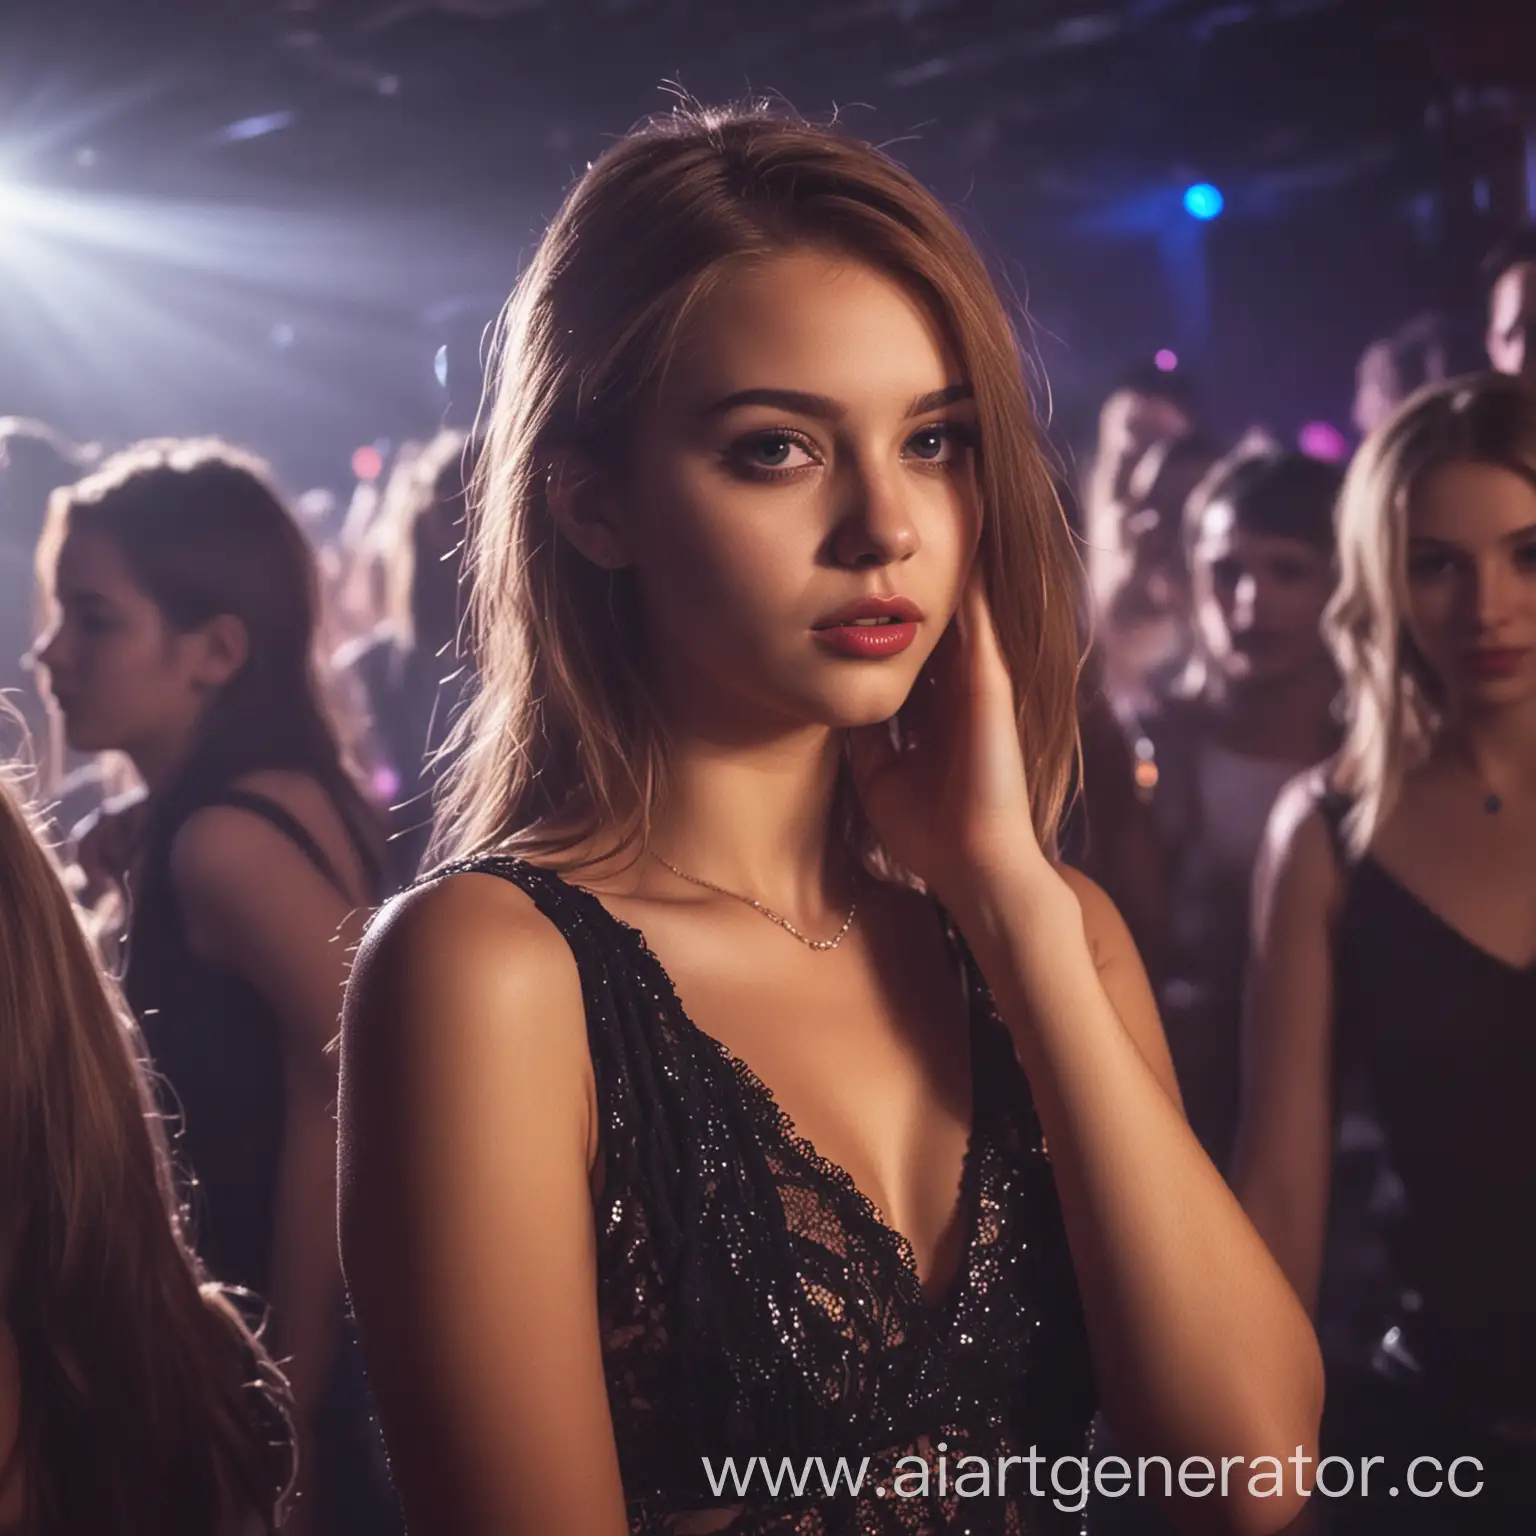 Young-Woman-Dancing-in-Nightclub-Atmosphere